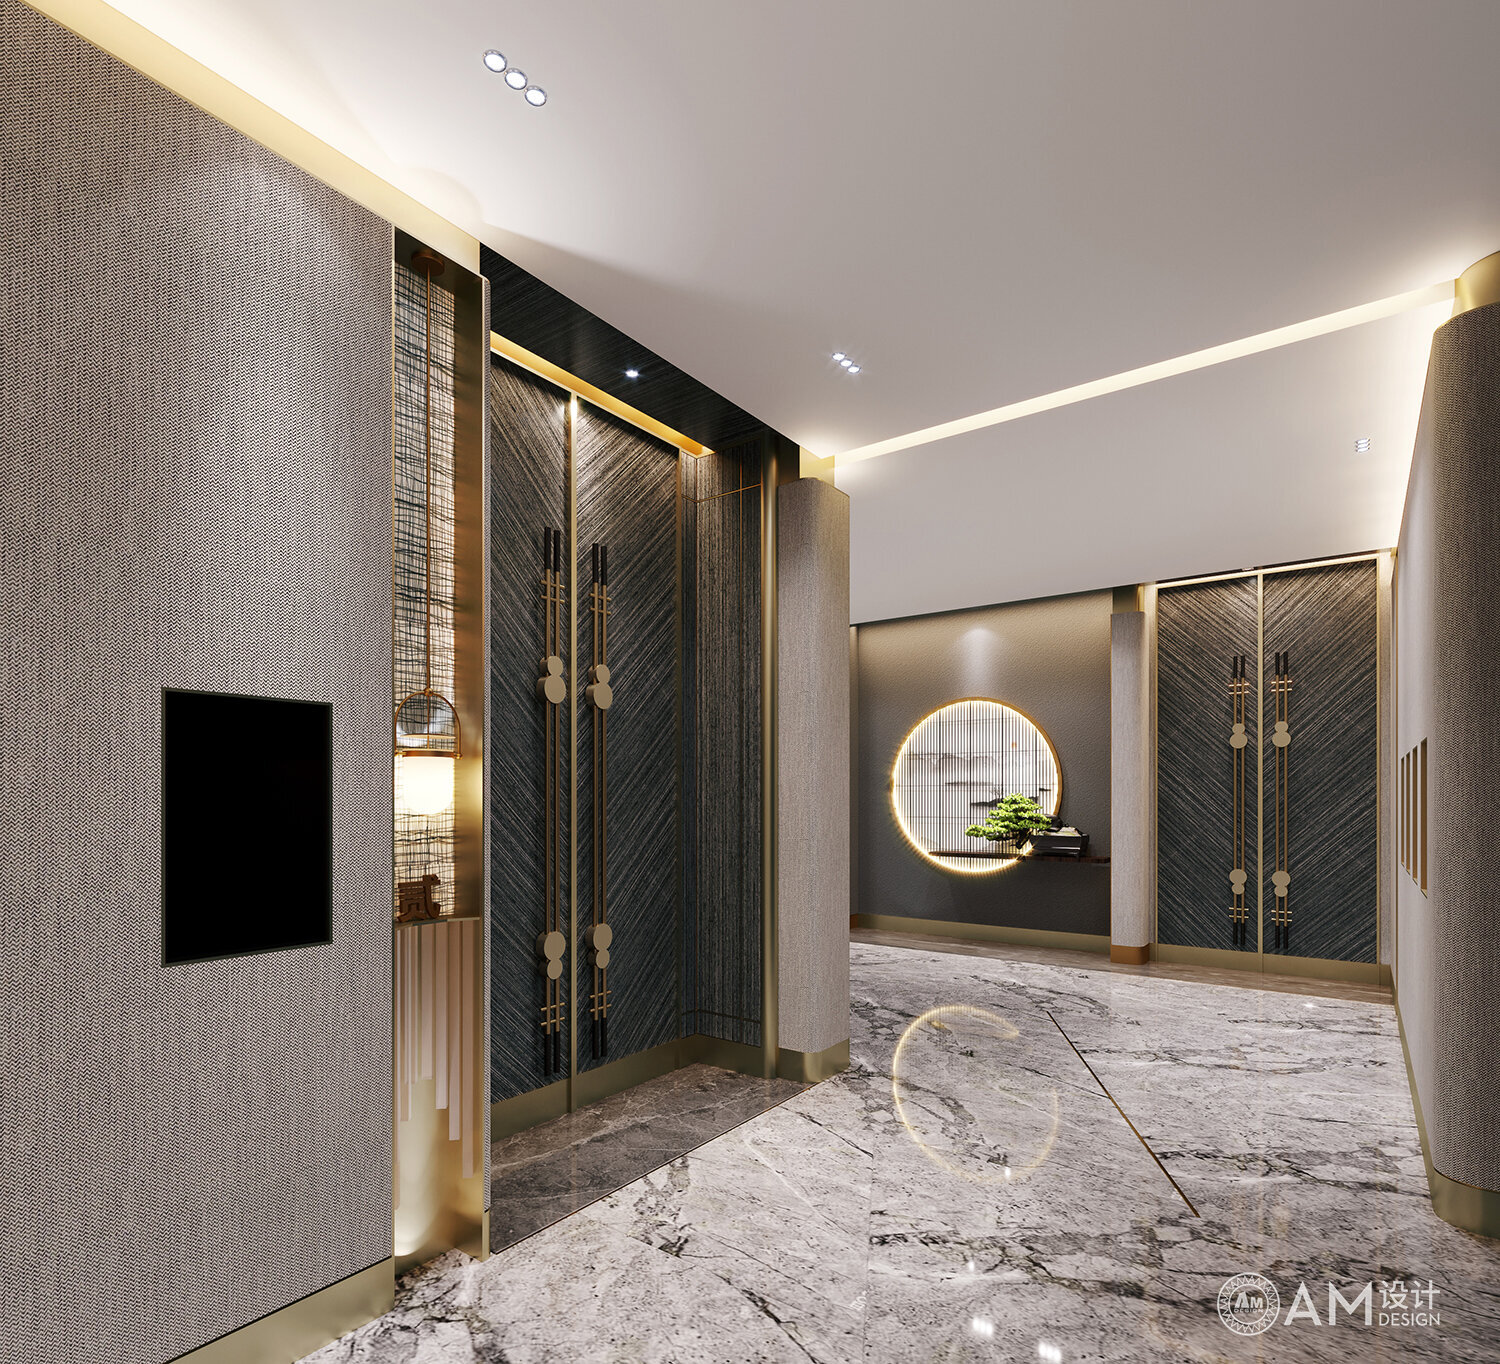 AM DESIGN | Corridor design of Liaoning Baida Wanmei Hotel